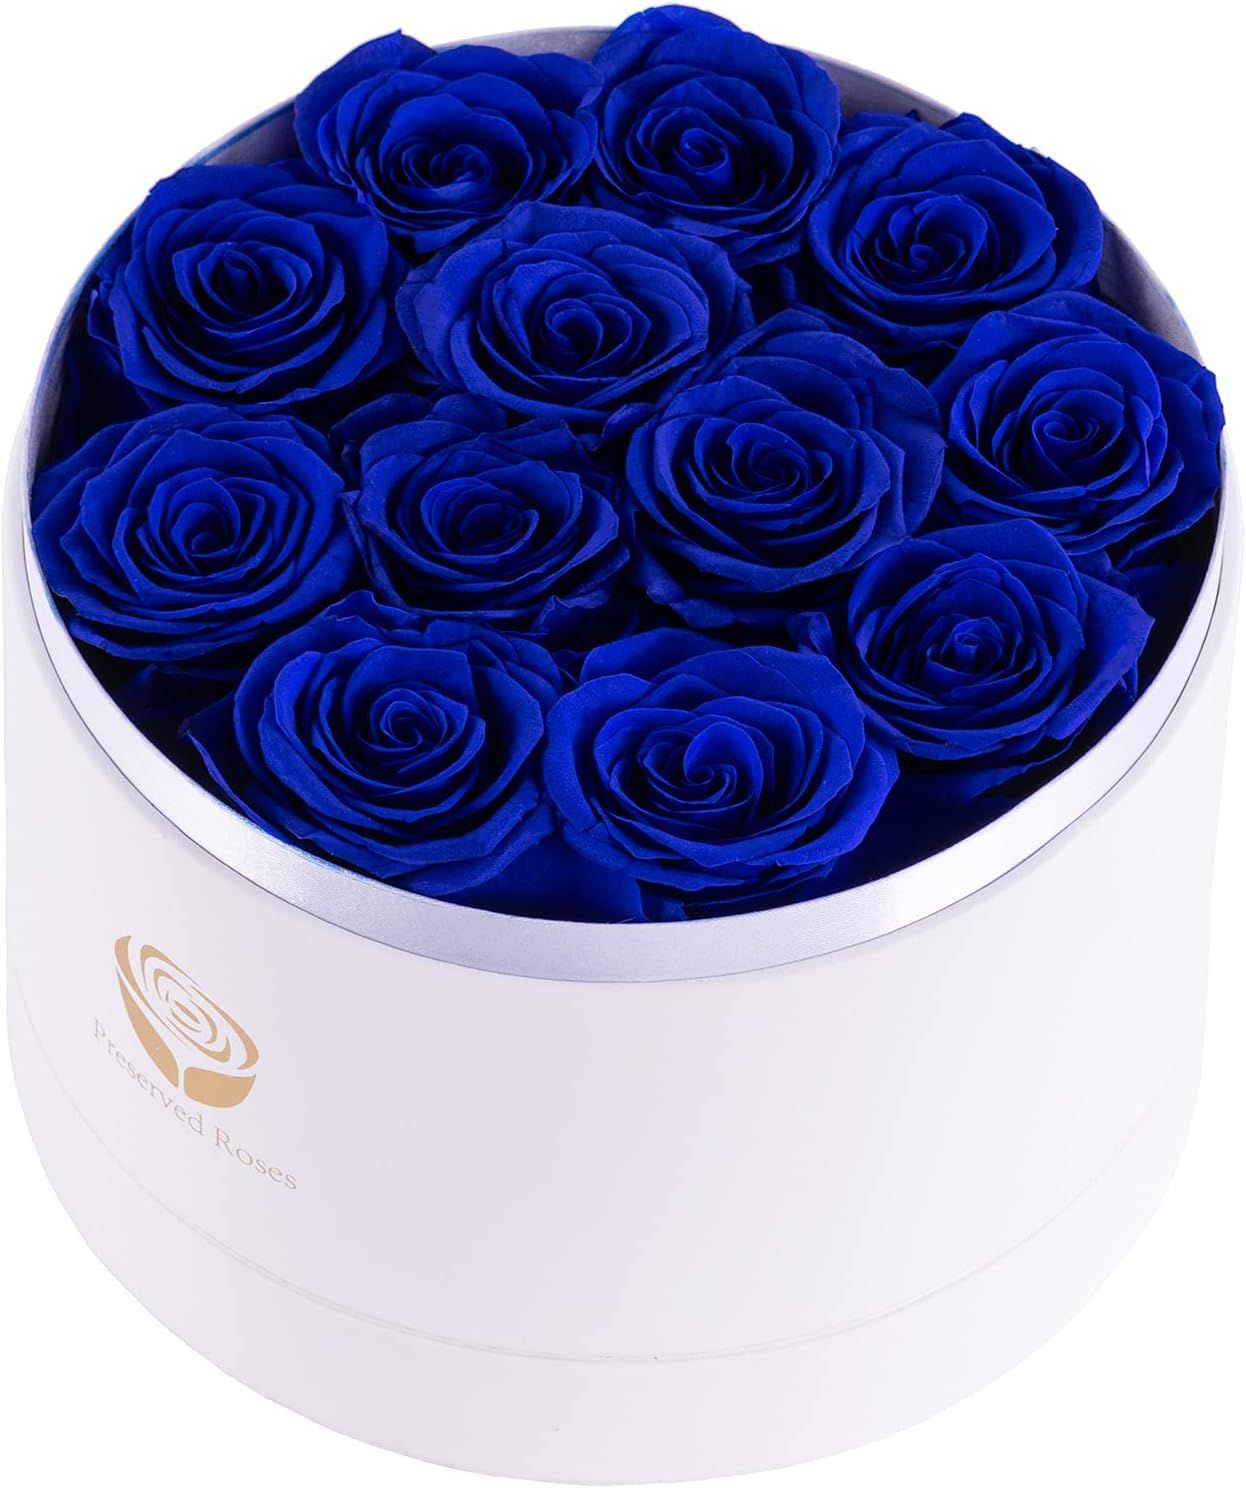 Forever Rose, Sunia Rose Gift for Her - Preserved Real Rose Eternal Romantic Gift for Girlfriend ... | Amazon (US)